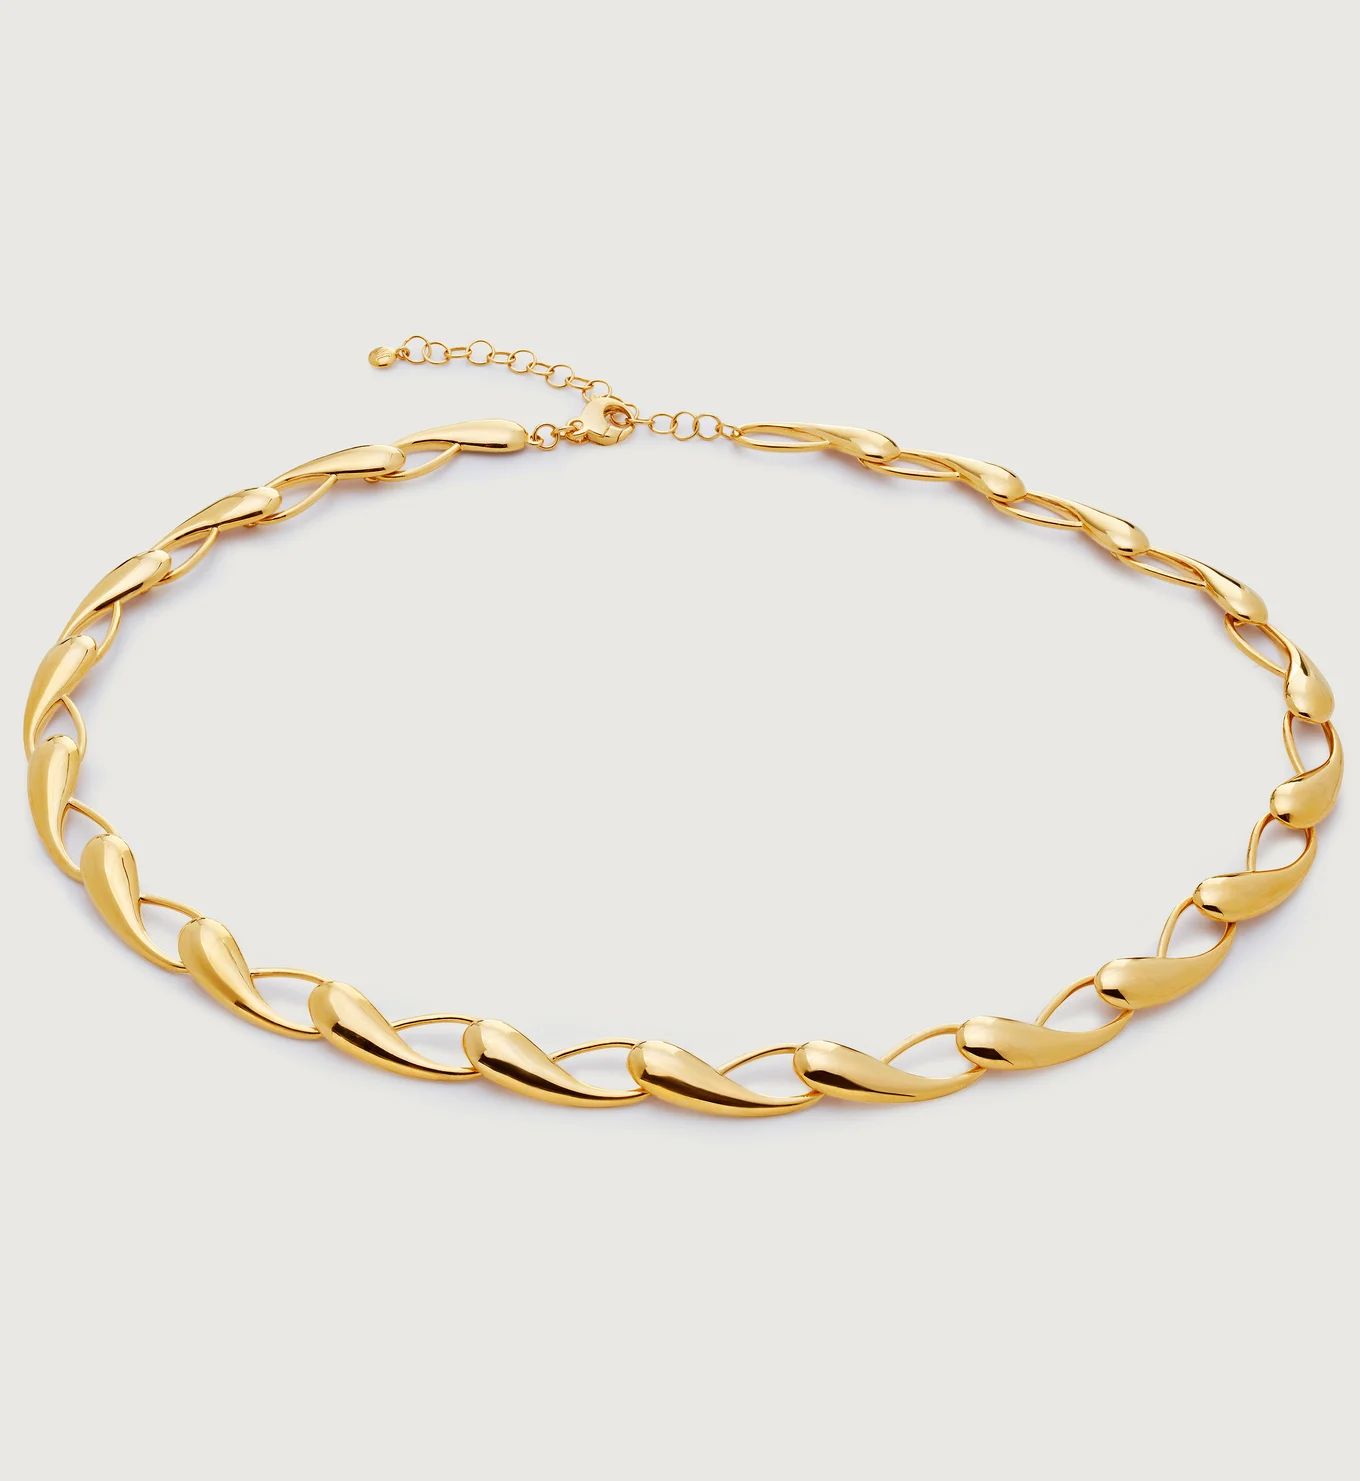 Nura Collar Necklace adjustable 38-44cm/15.5-17.5' | Monica Vinader (Global)